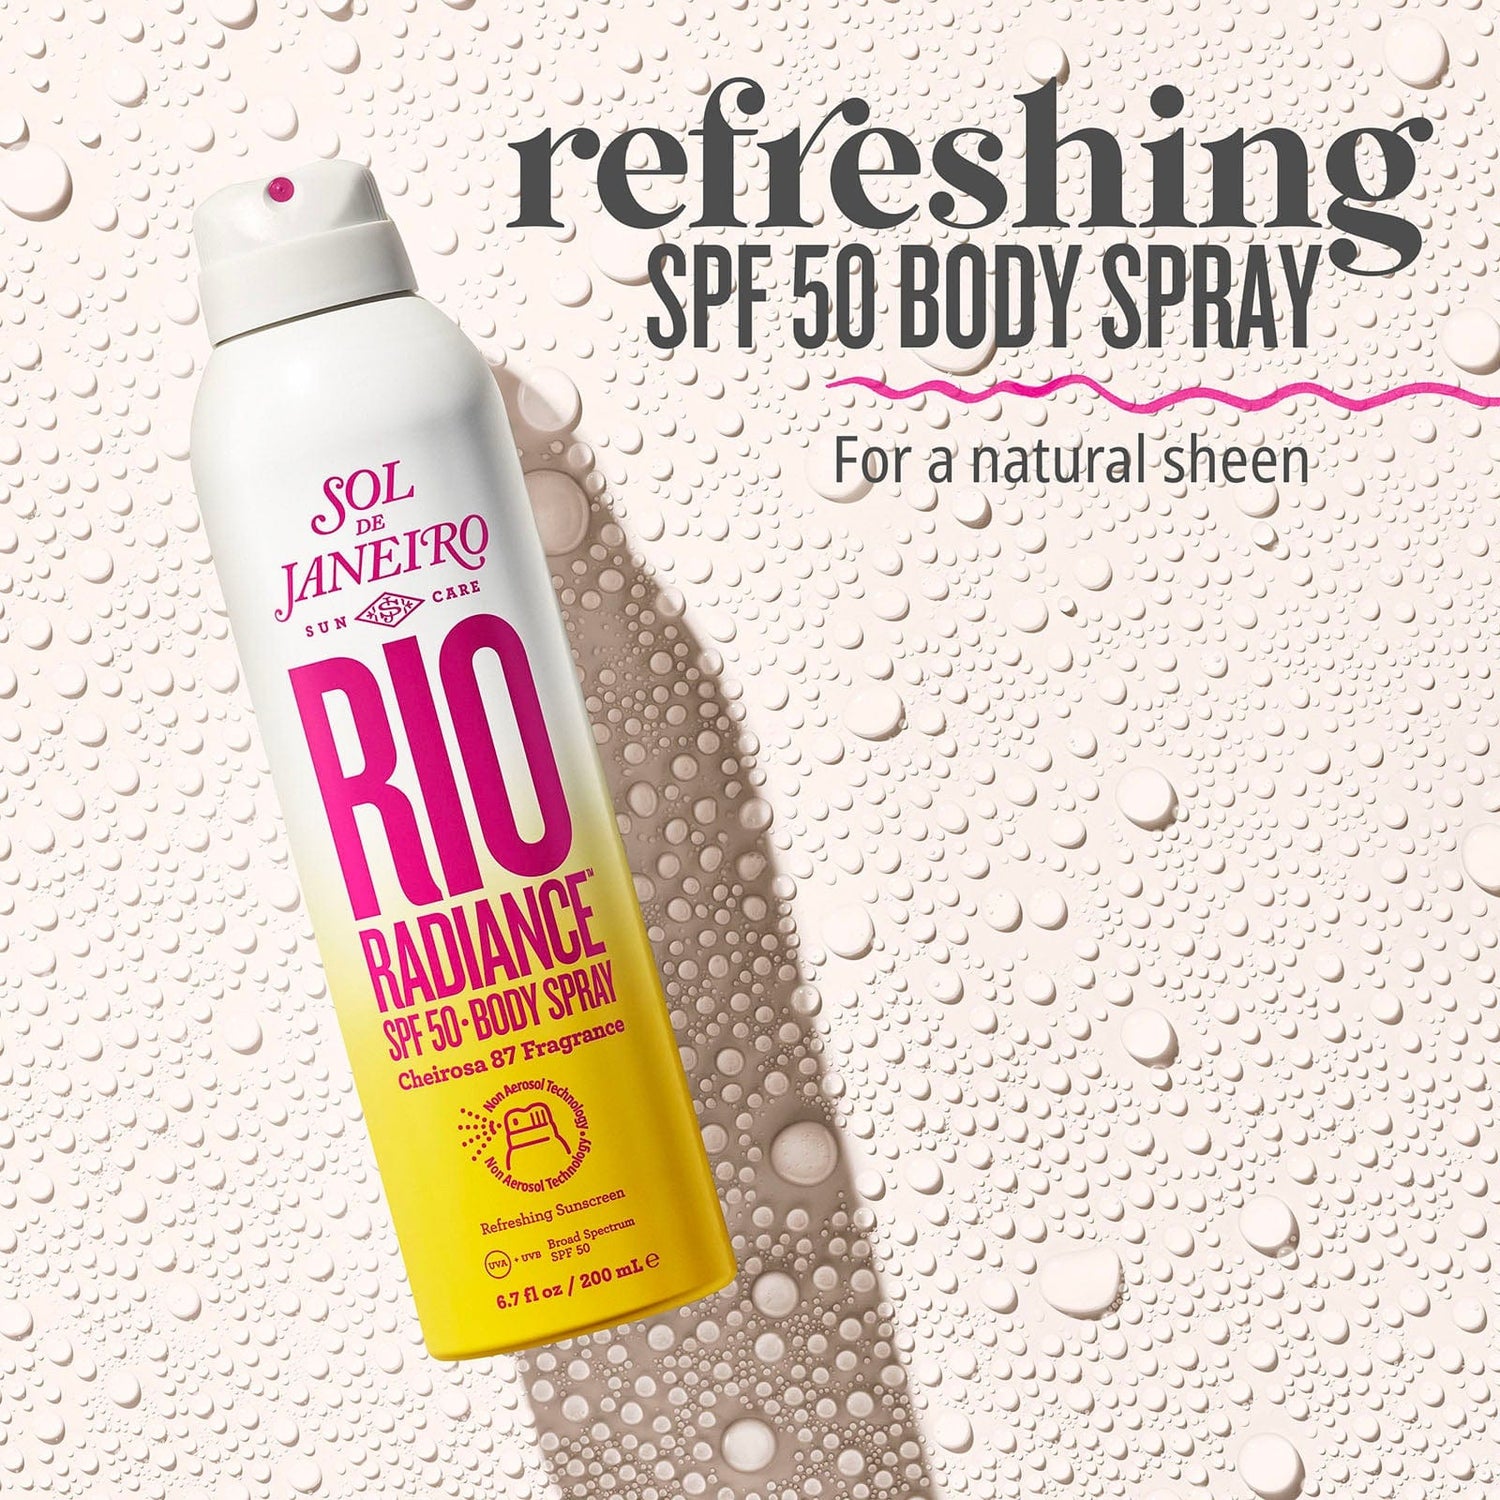 Refreshing SPF 50 Body Spray for a natural sheen